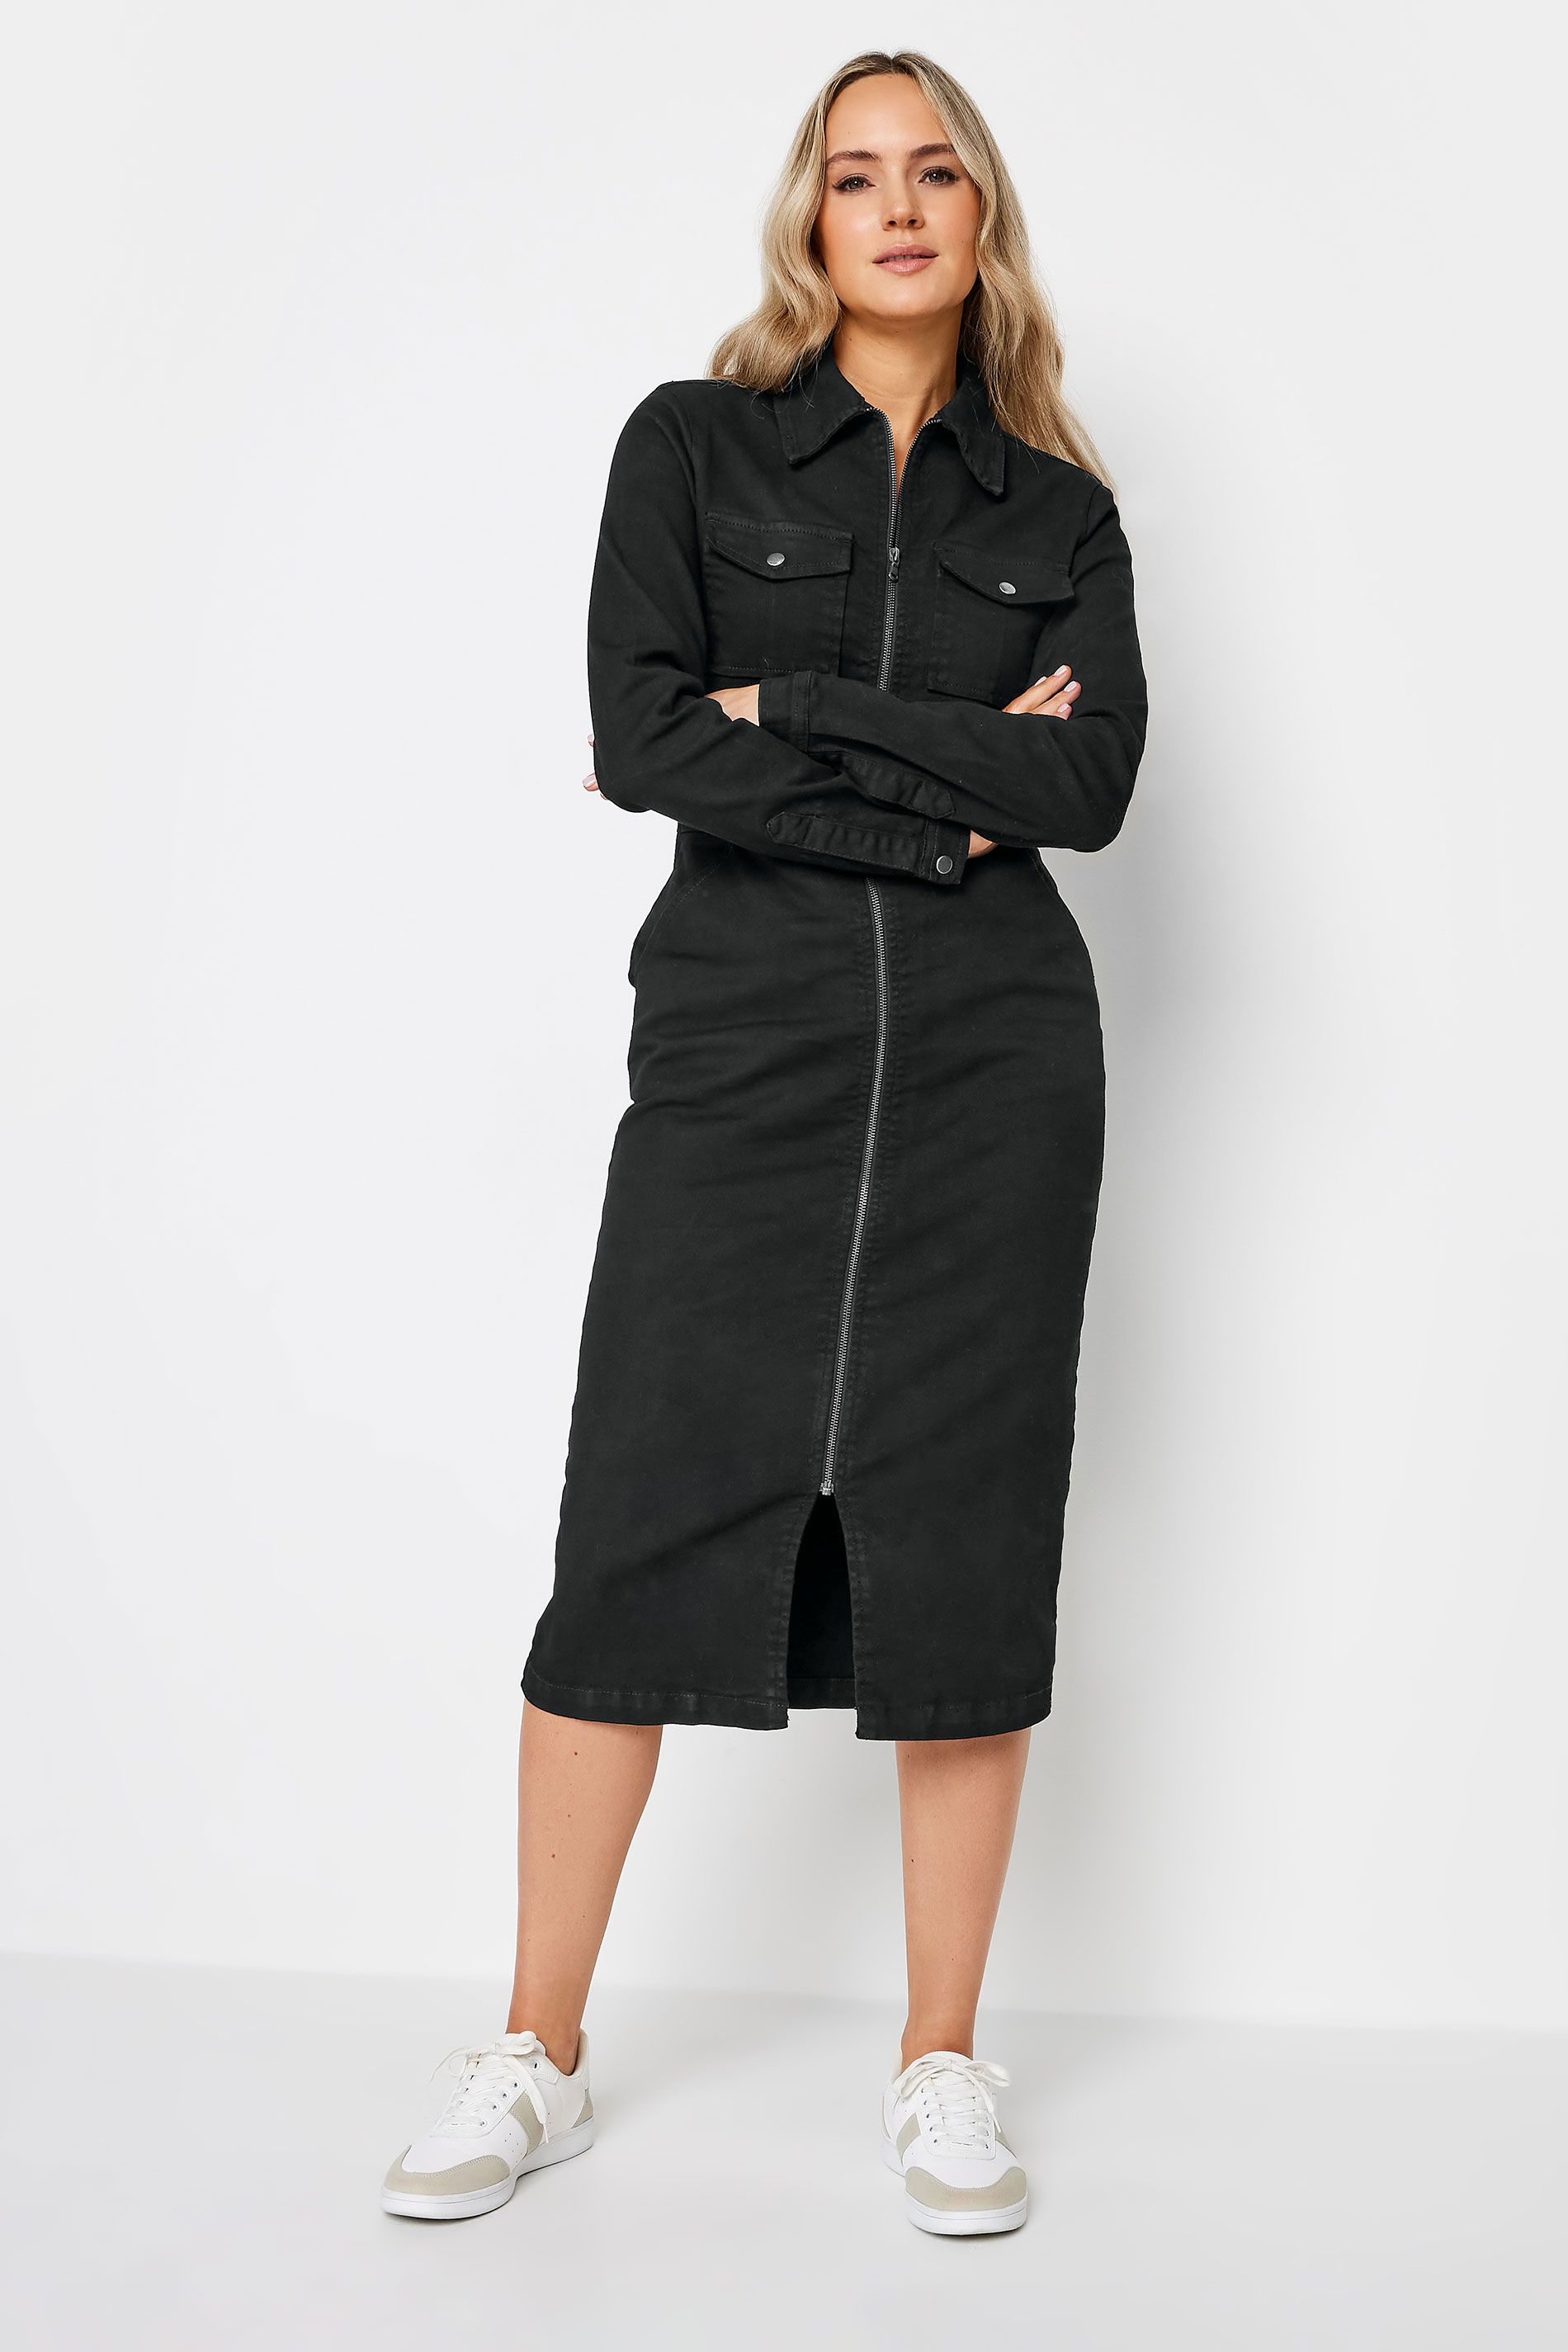 LTS Tall Black Denim Zip Through Midi Dress | Long Tall Sally